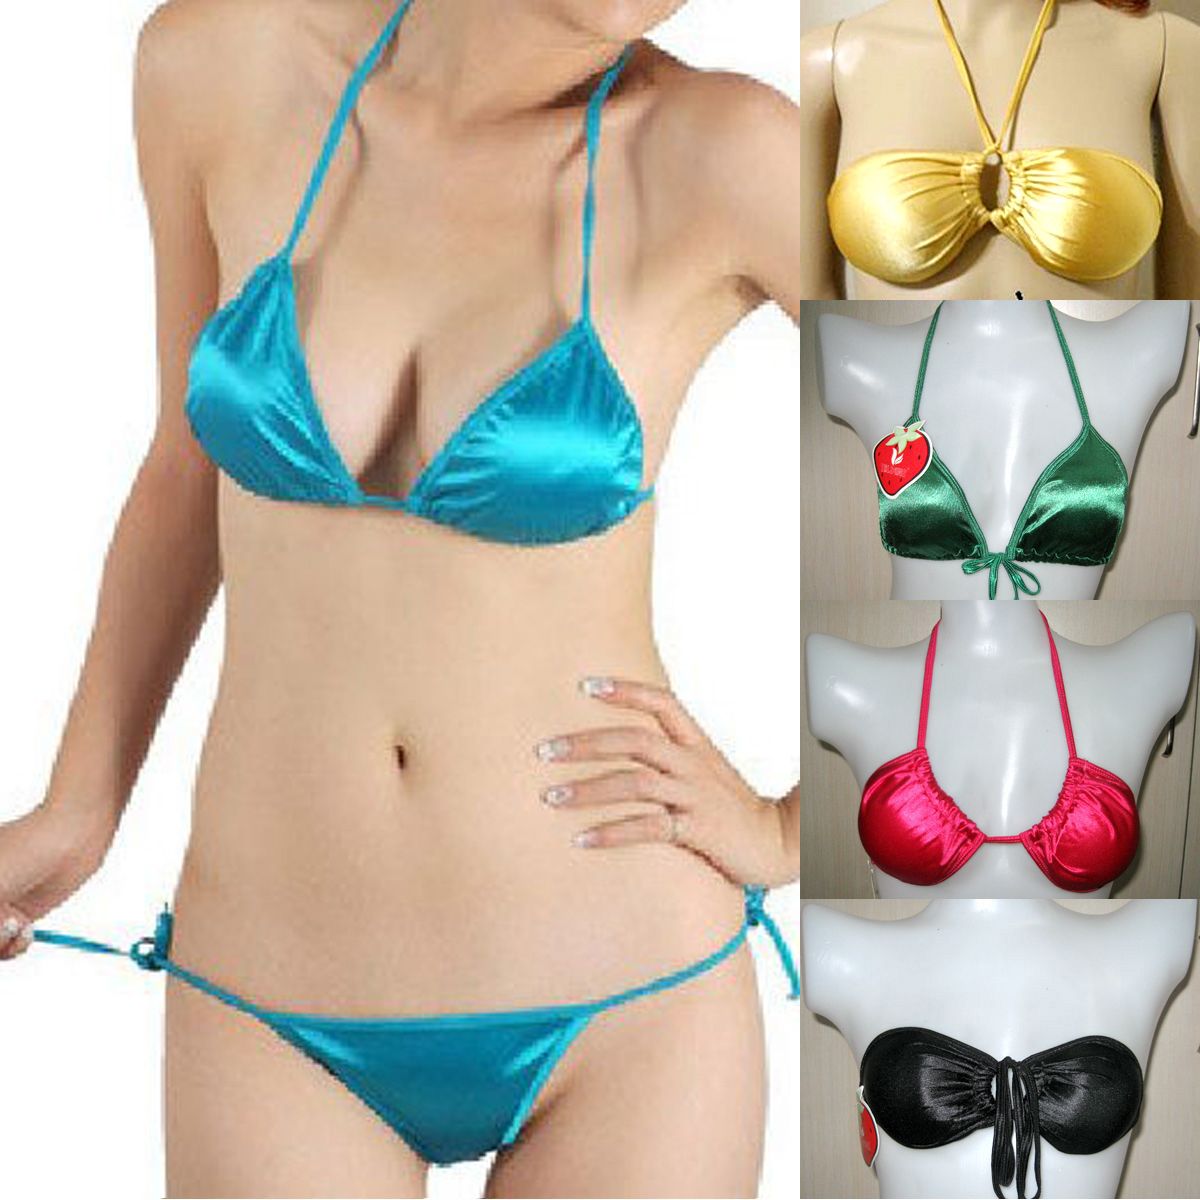 Bikini skimpily bra set glossy halter-neck triangle cup silks and satins wire satin underwear fabric panties